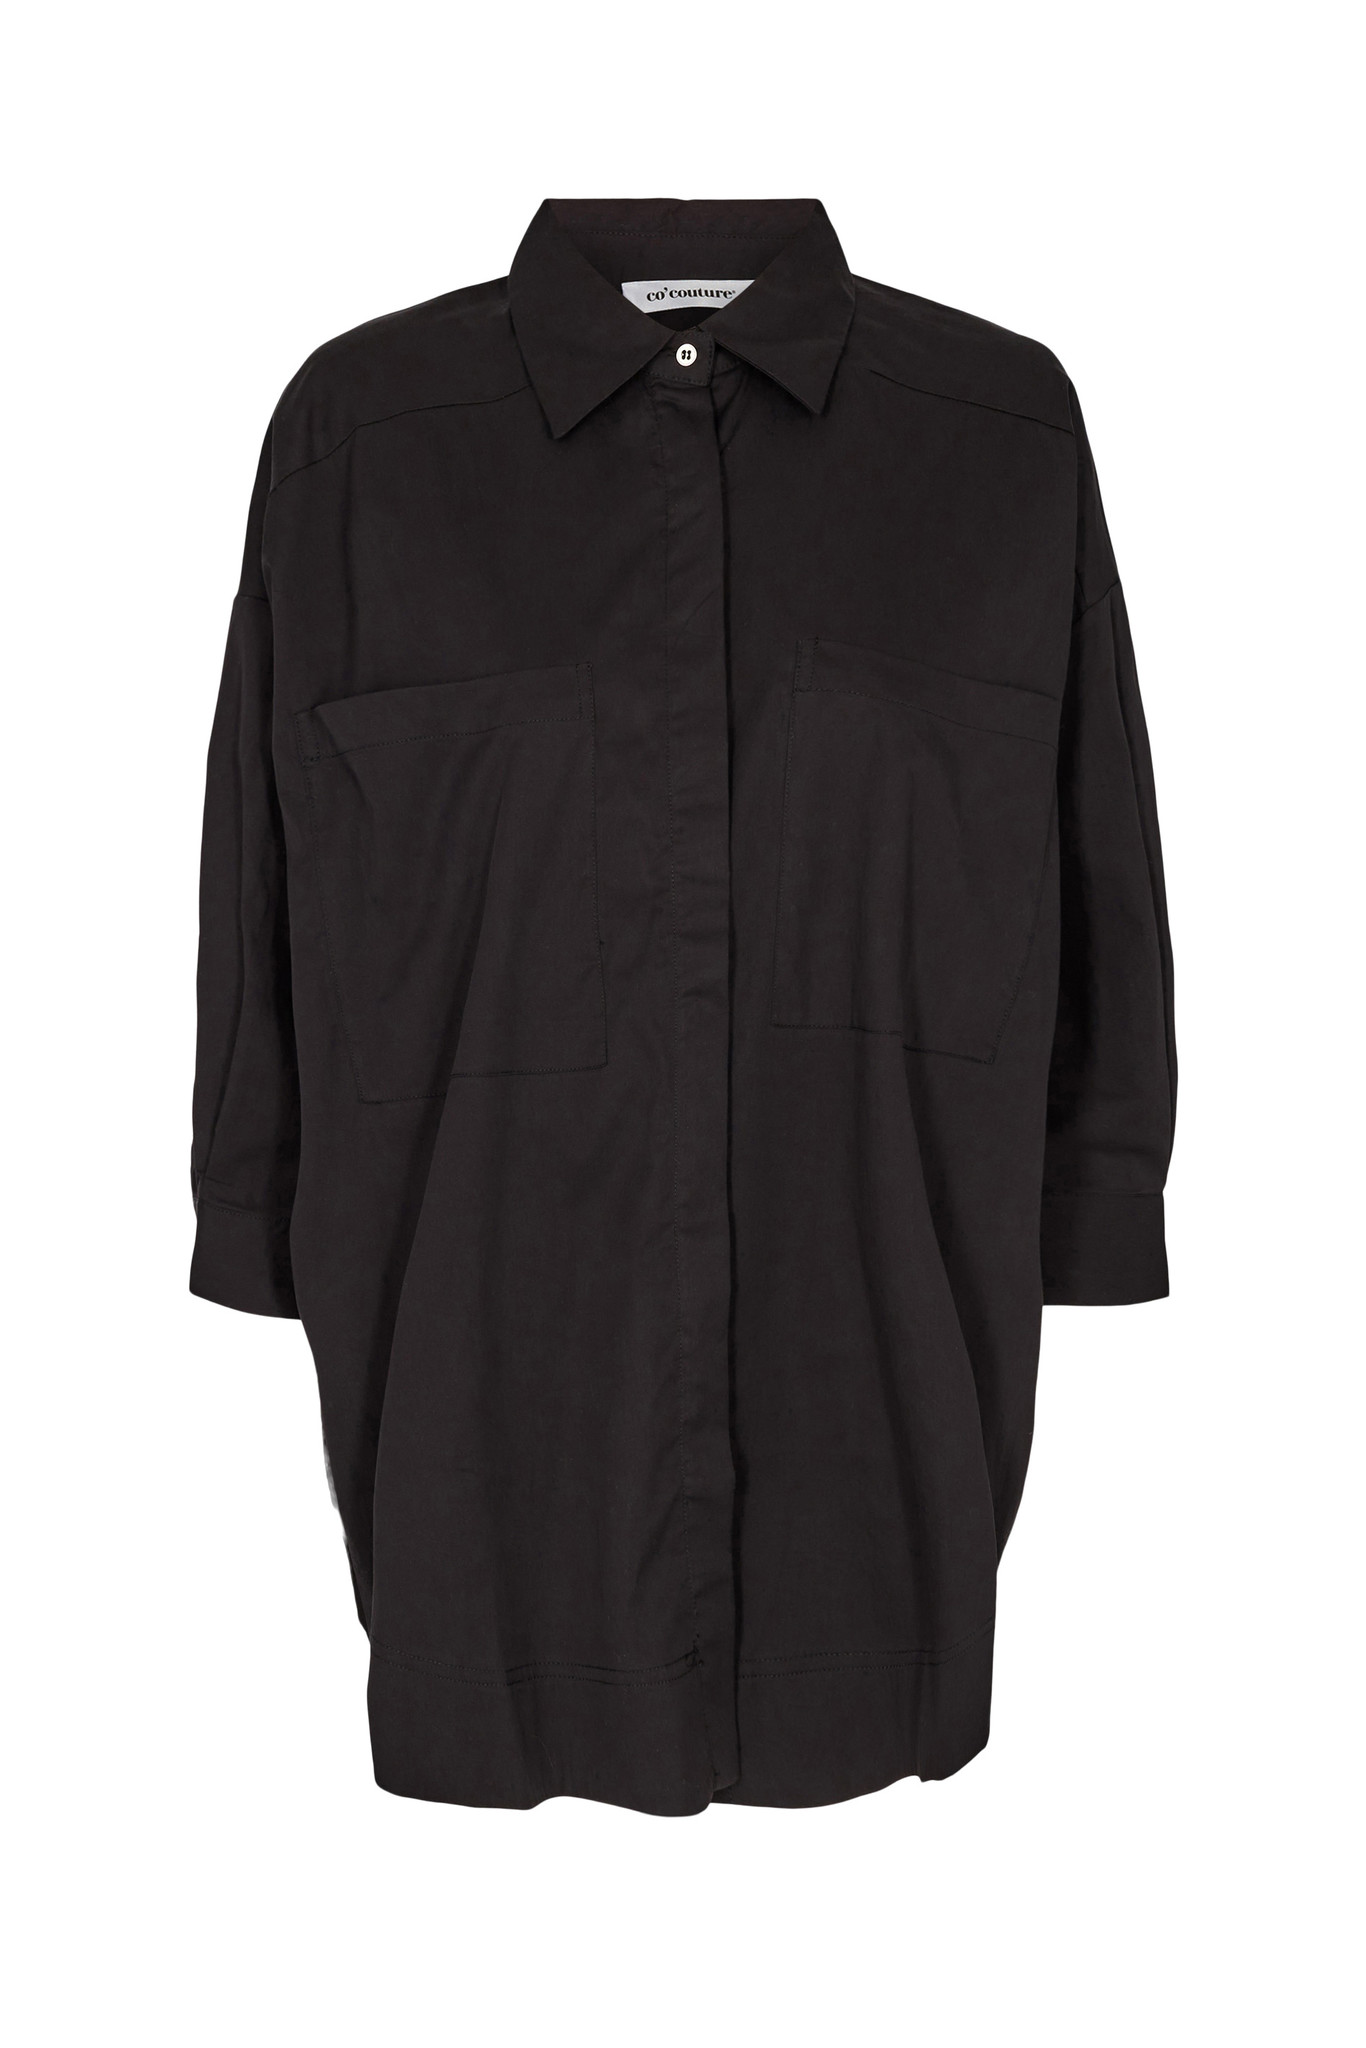 Cotton Crisp Pocket Shirt - Black-1